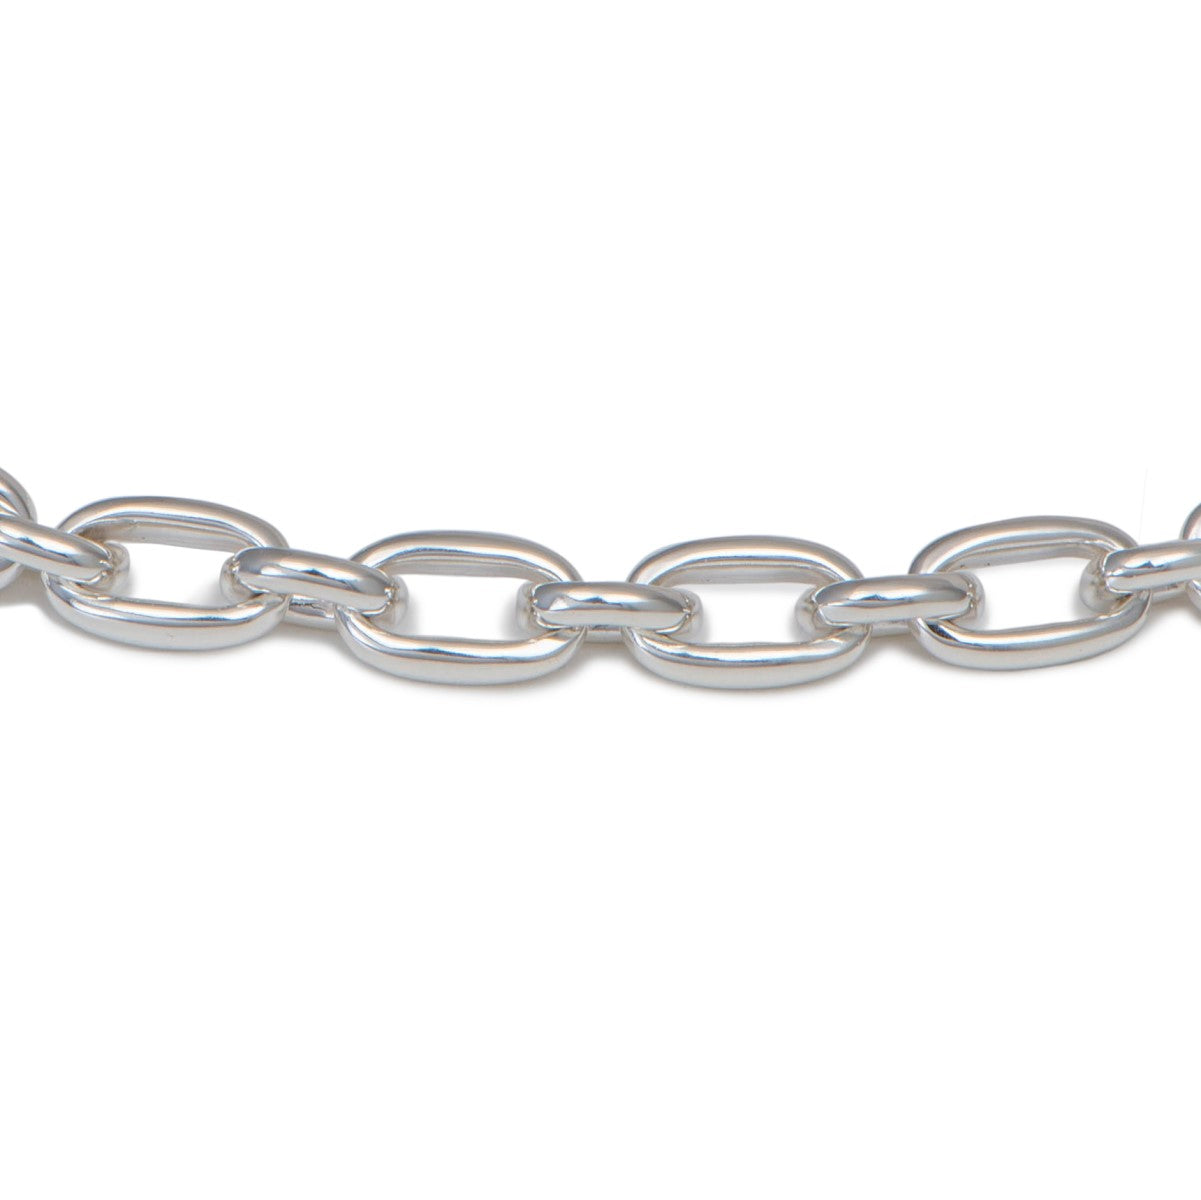 Statement Sterling Silver Link Bracelet with Oval Links